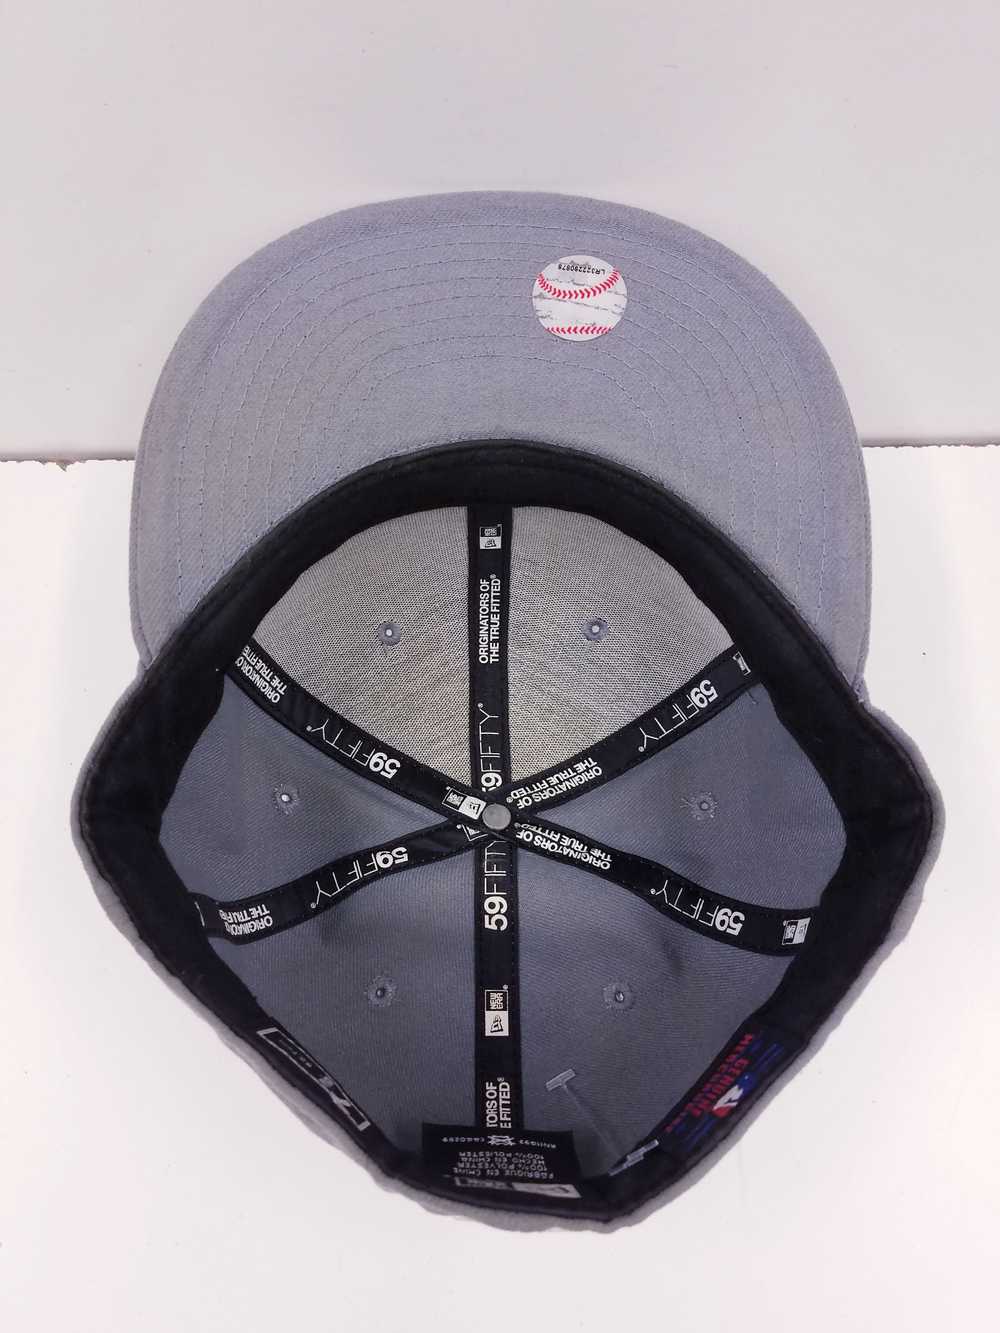 Bundle of 2 New Era Chicago White Sox Men's Hats - image 6